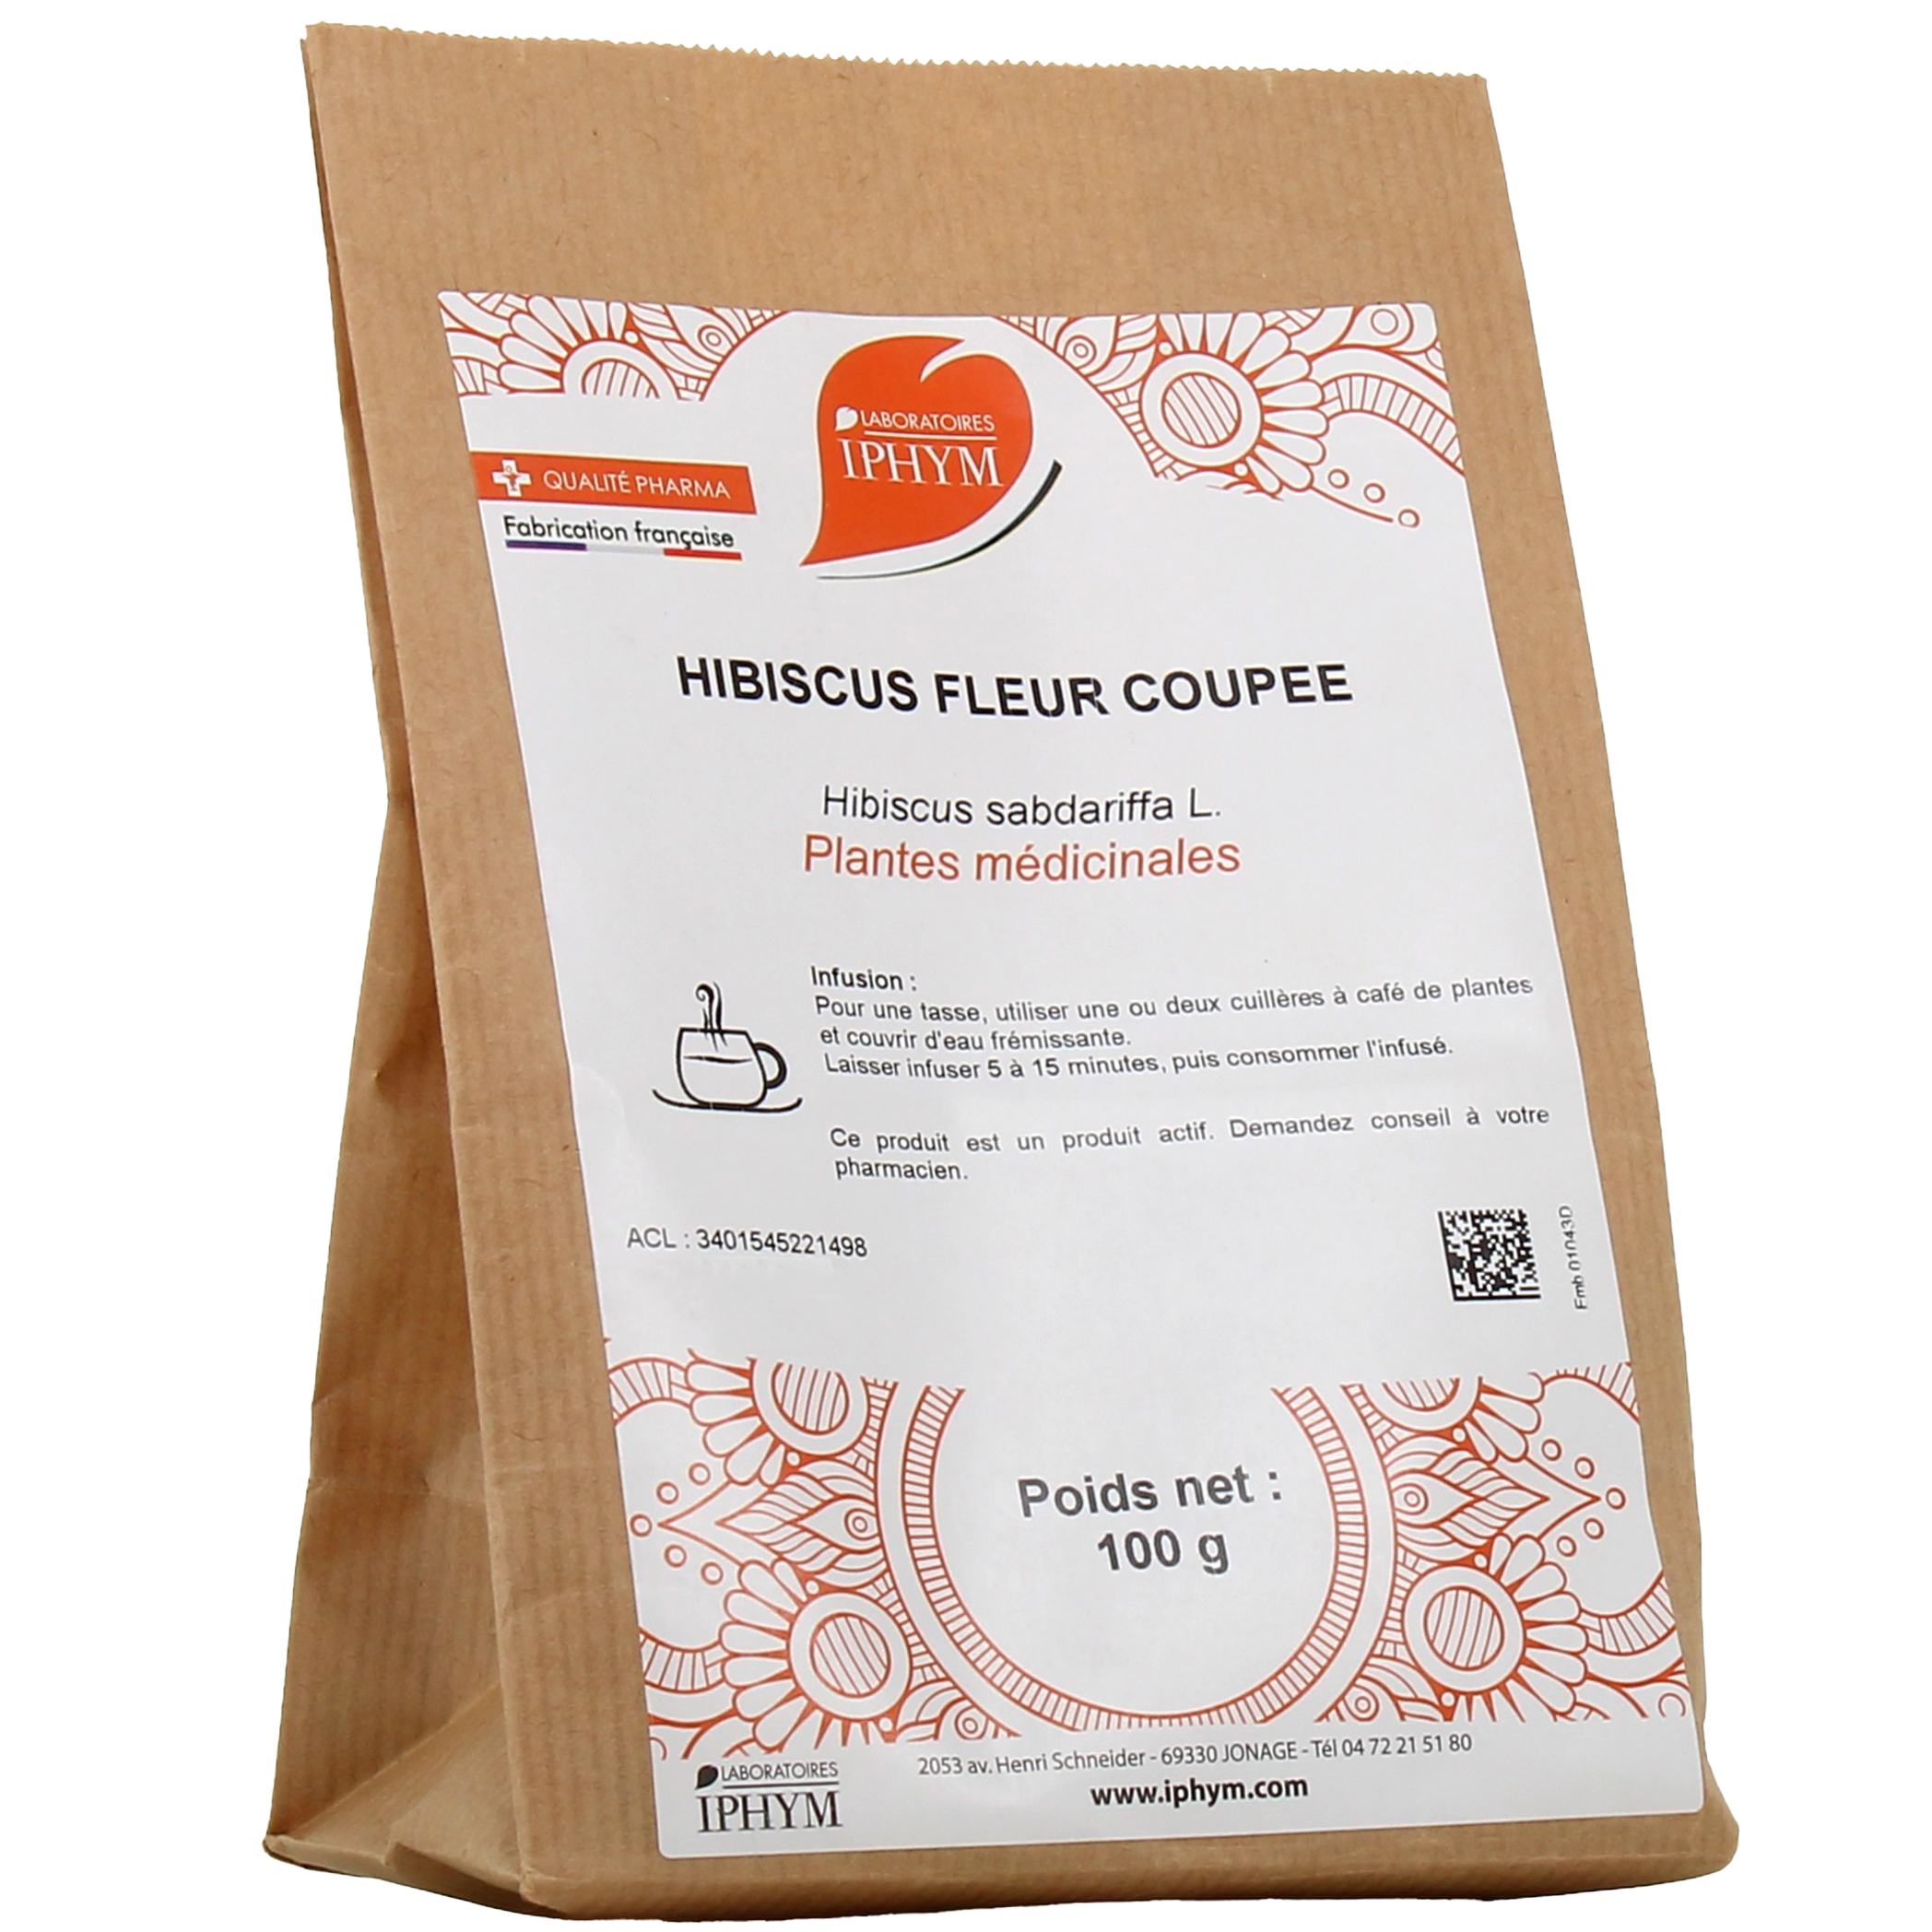 Feuilles d'hibiscus (Bissap) - 100% Naturelle - 100g - Les